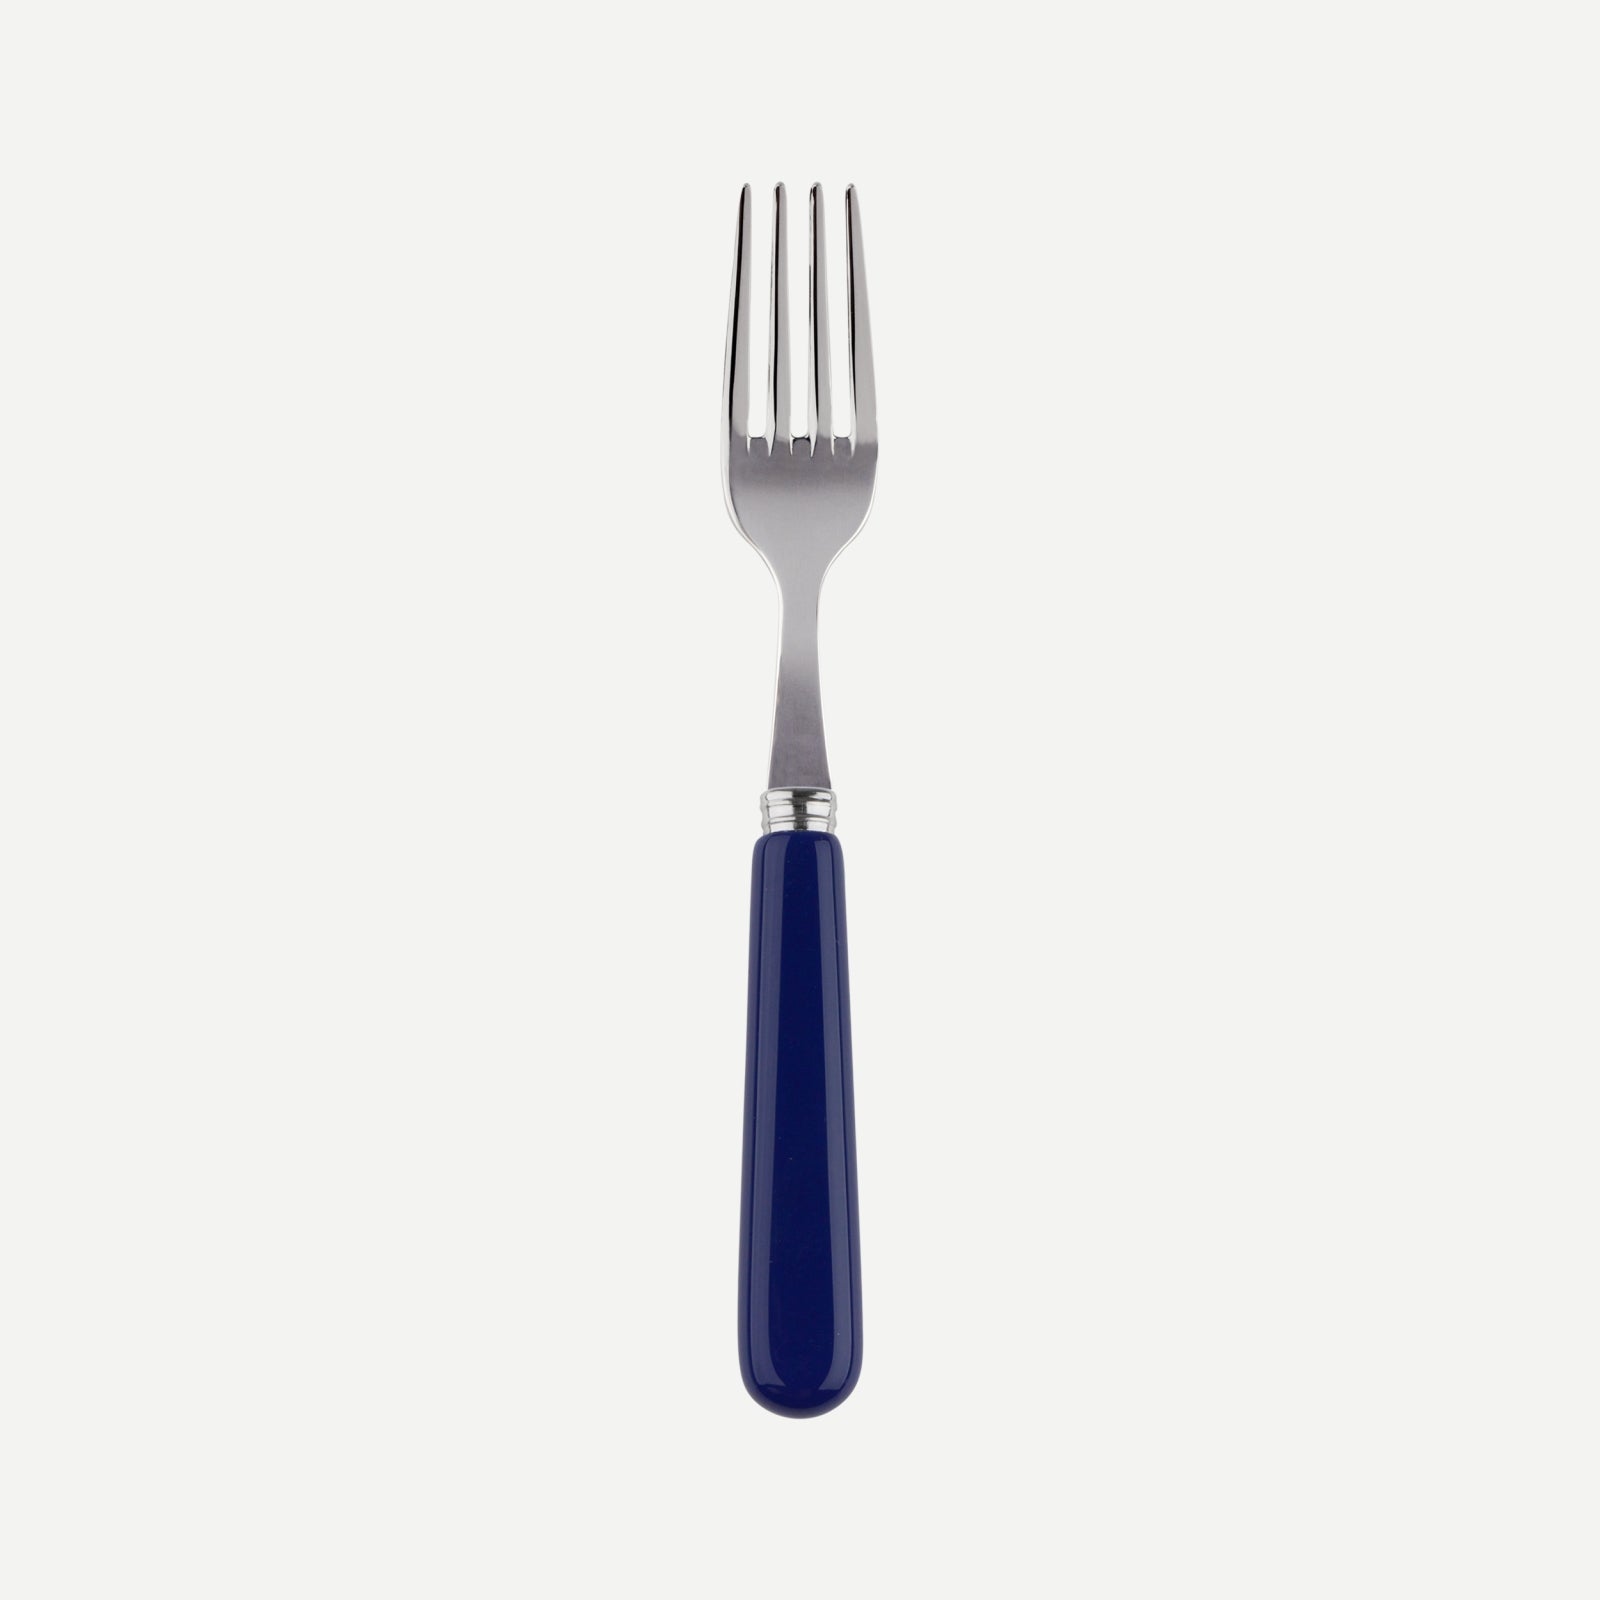 Petite fourchette - Pop unis - Bleu marine